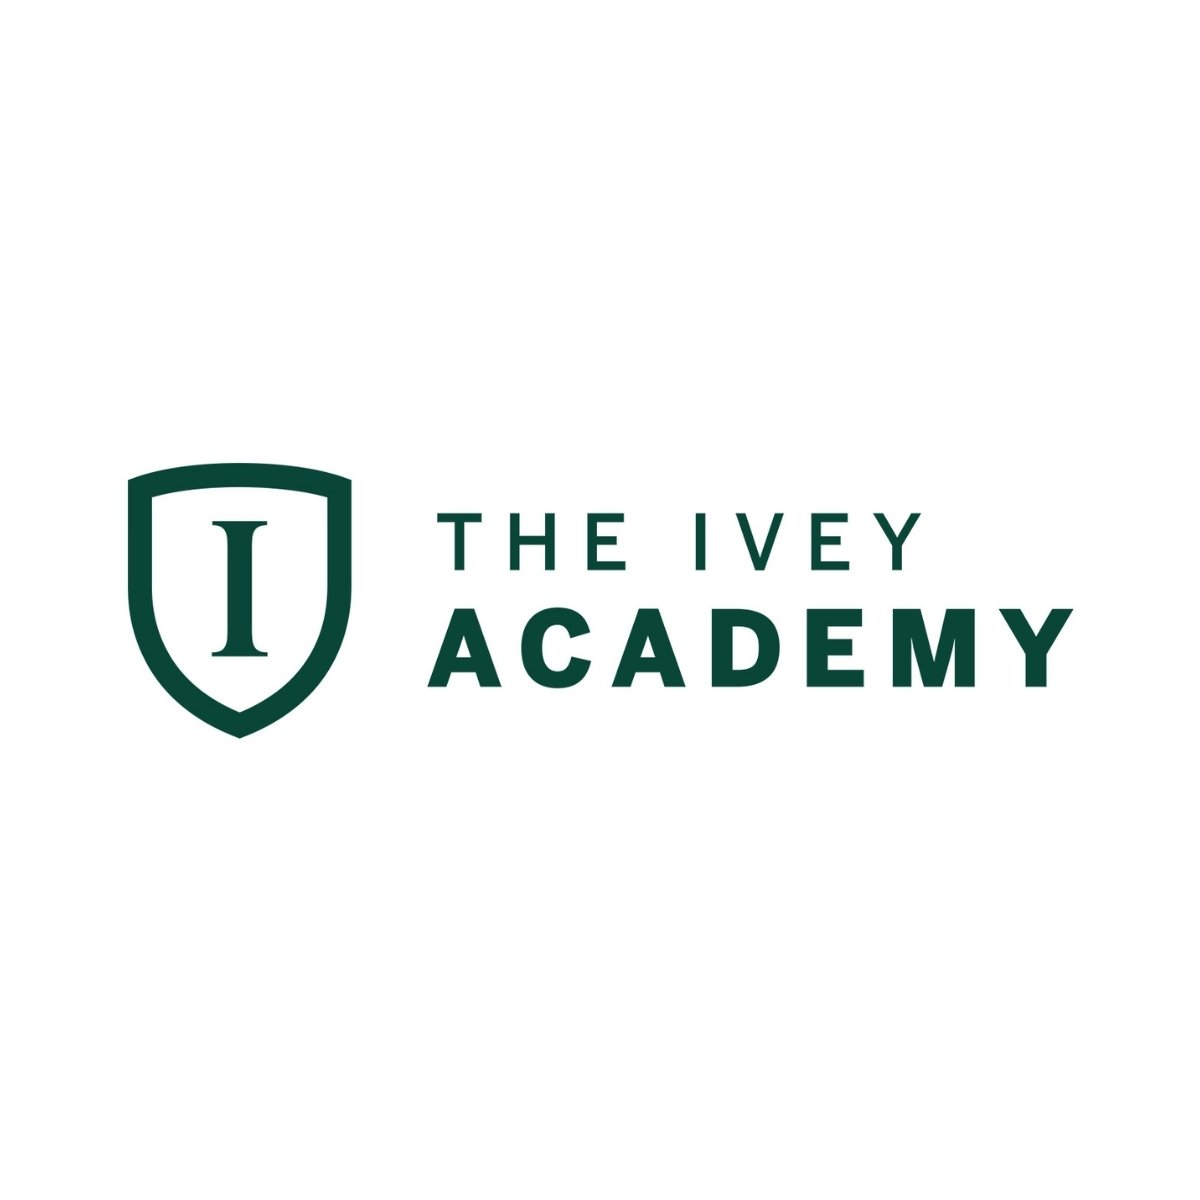 Ivey academy logo